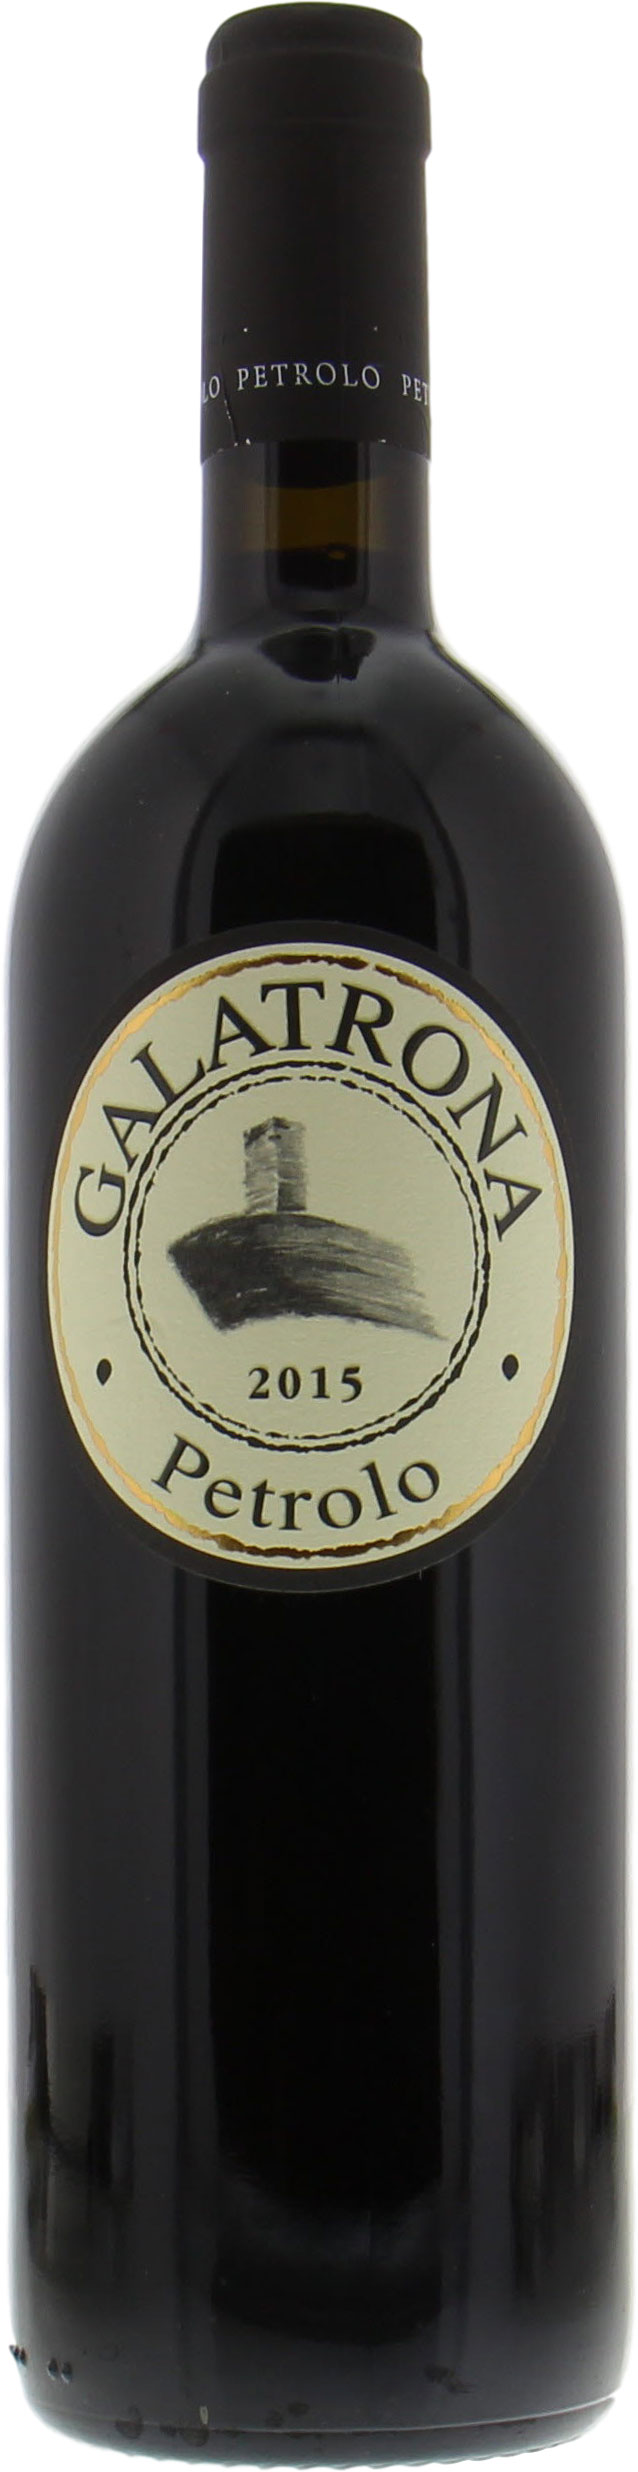 Petrolo - Galatrona 2015 Perfect